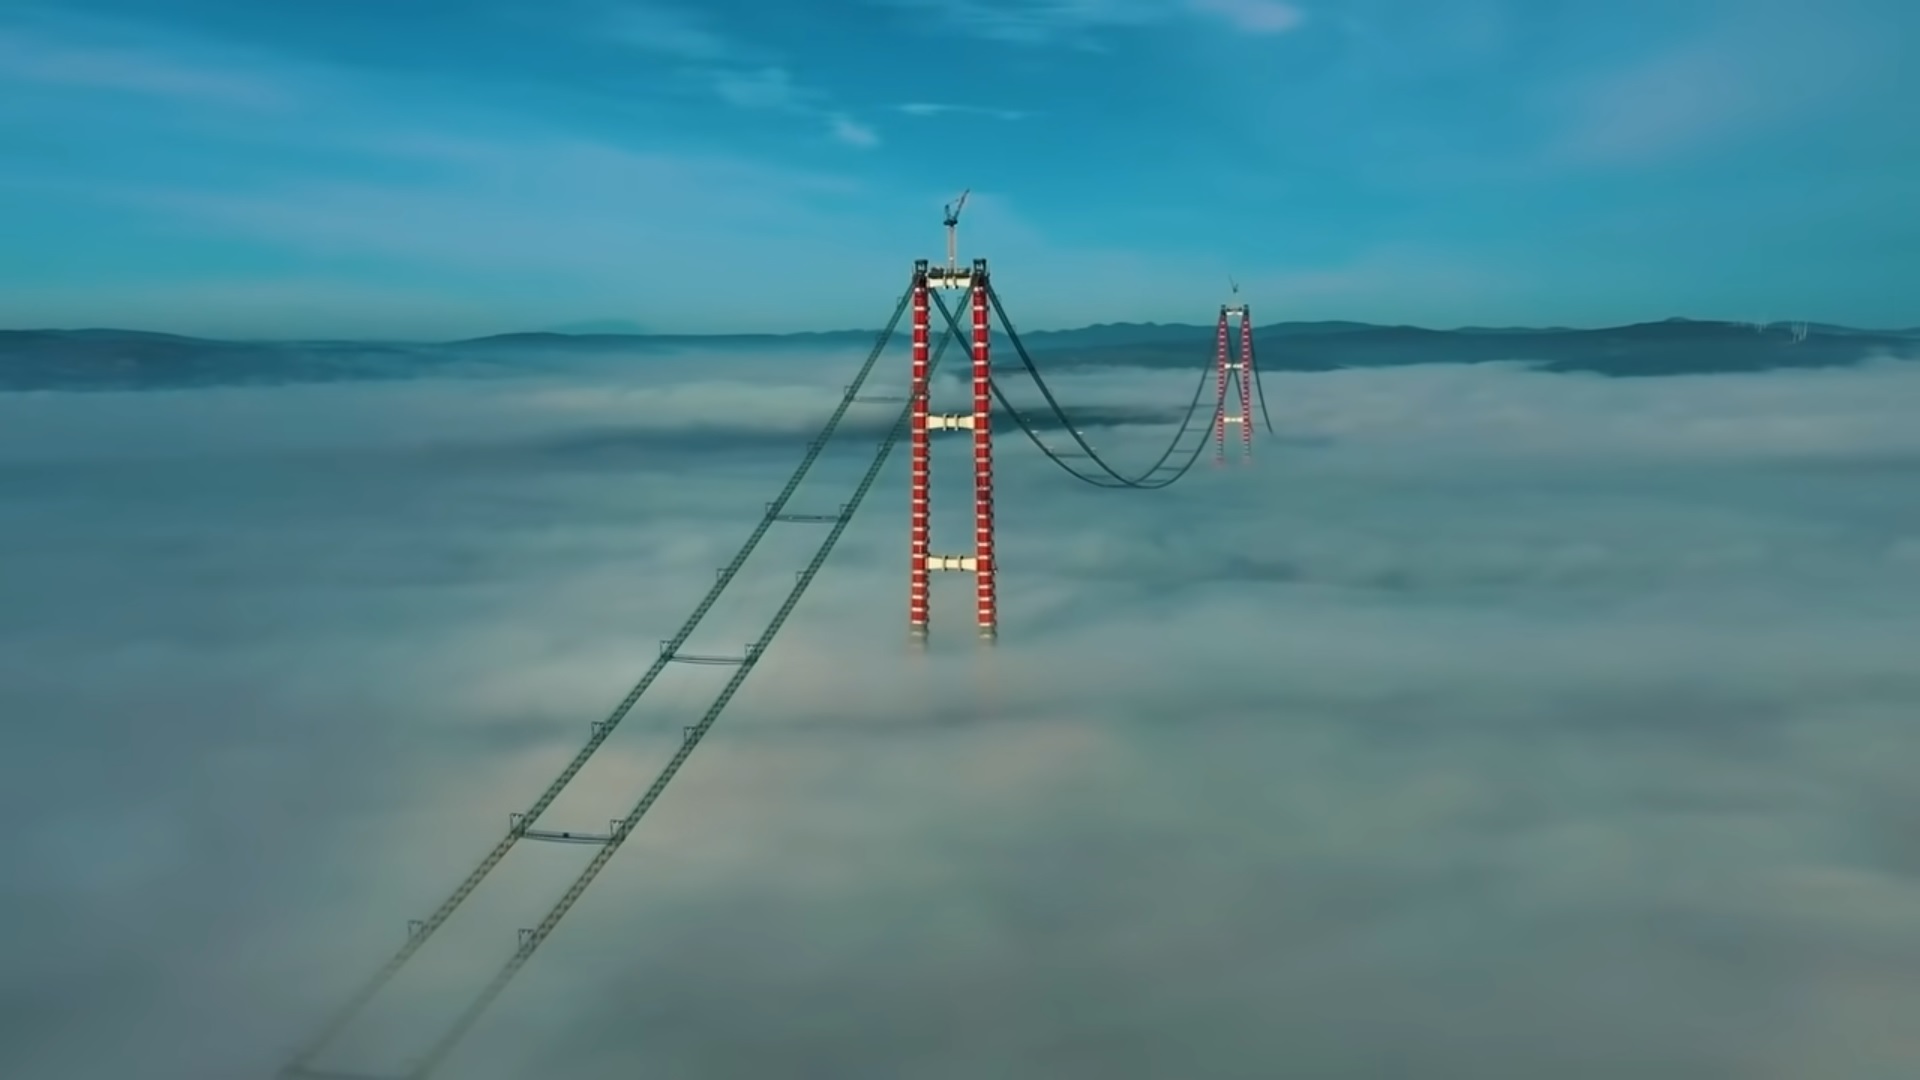 Design and construction of the world’s longest suspension bridge, Turkey